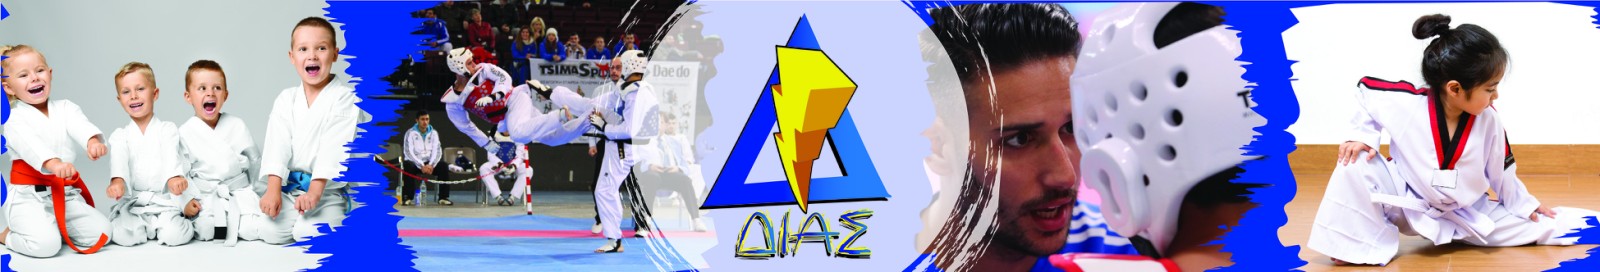 Dias Athletic Club